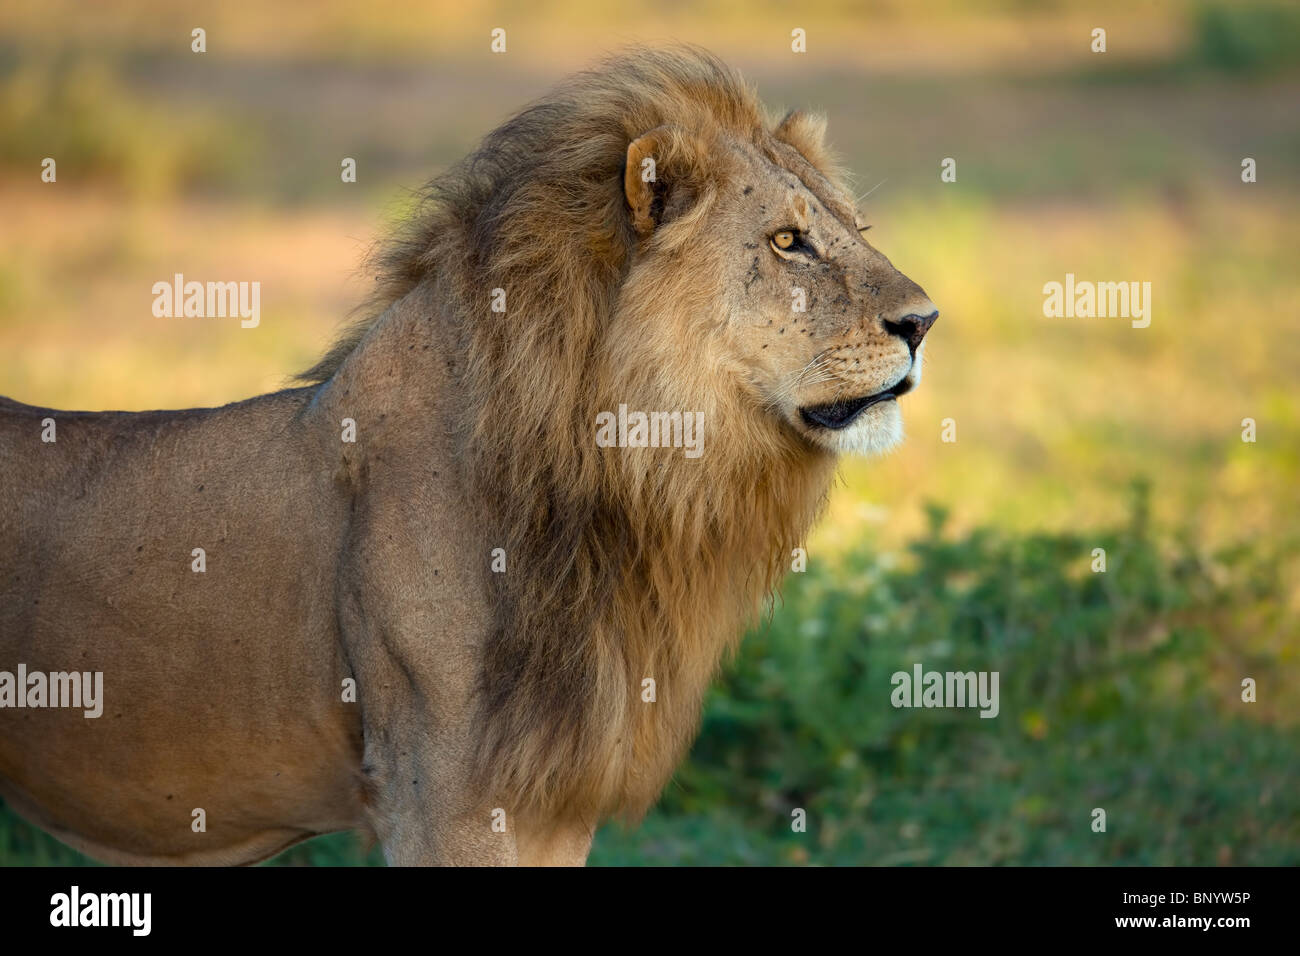 Lion close-up portrait,Serengeti, Tanzania Stock Photo